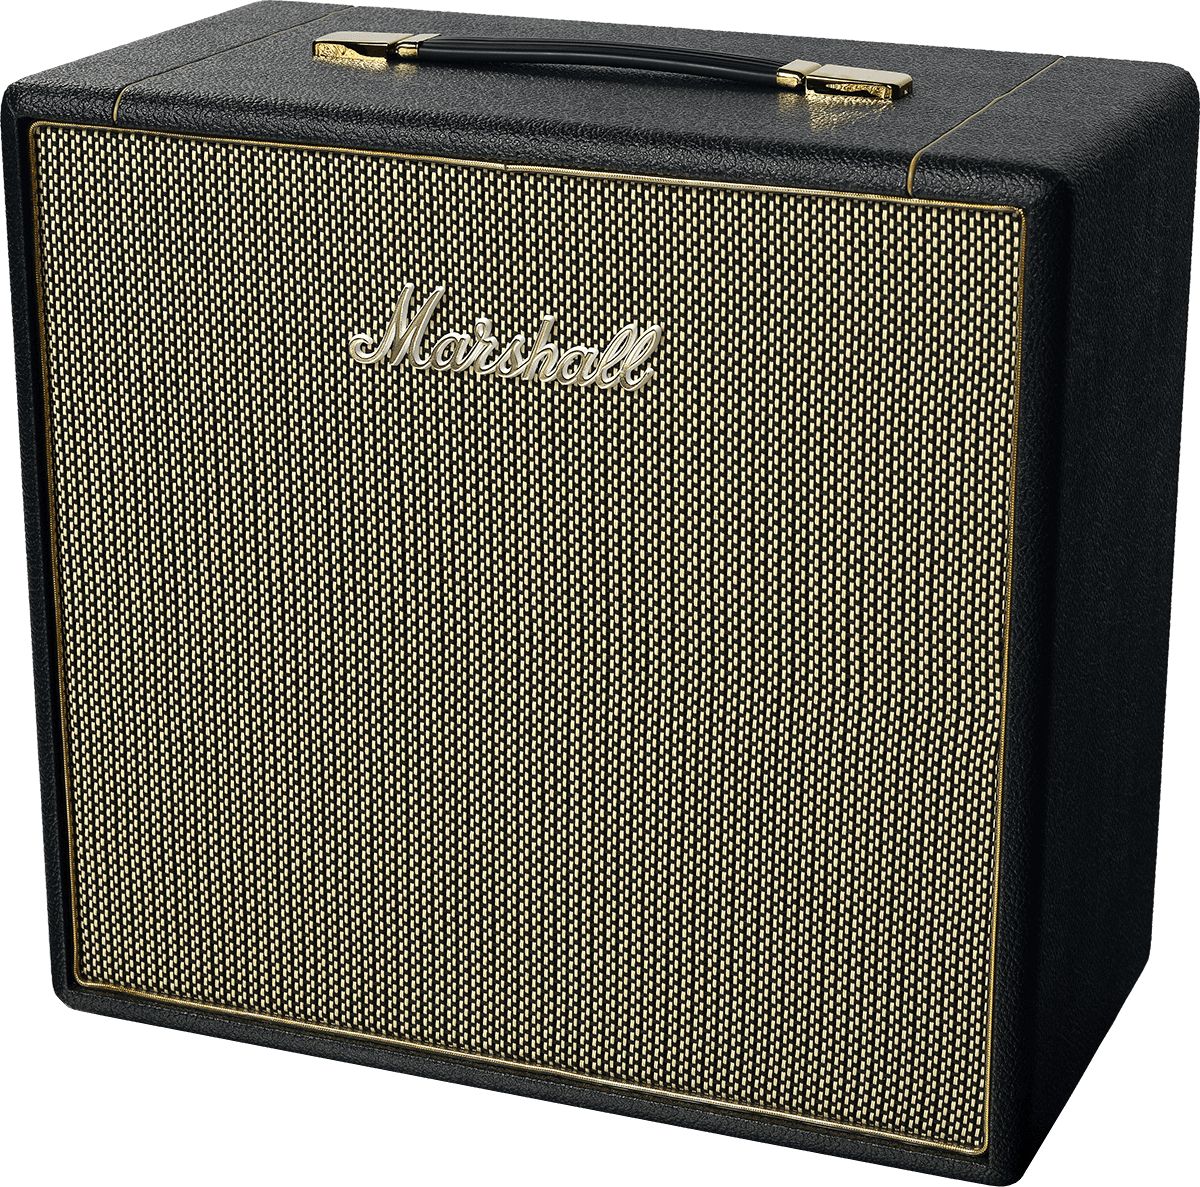 Marshall Studio Vintage 1x12 - Electric guitar amp cabinet - Variation 3